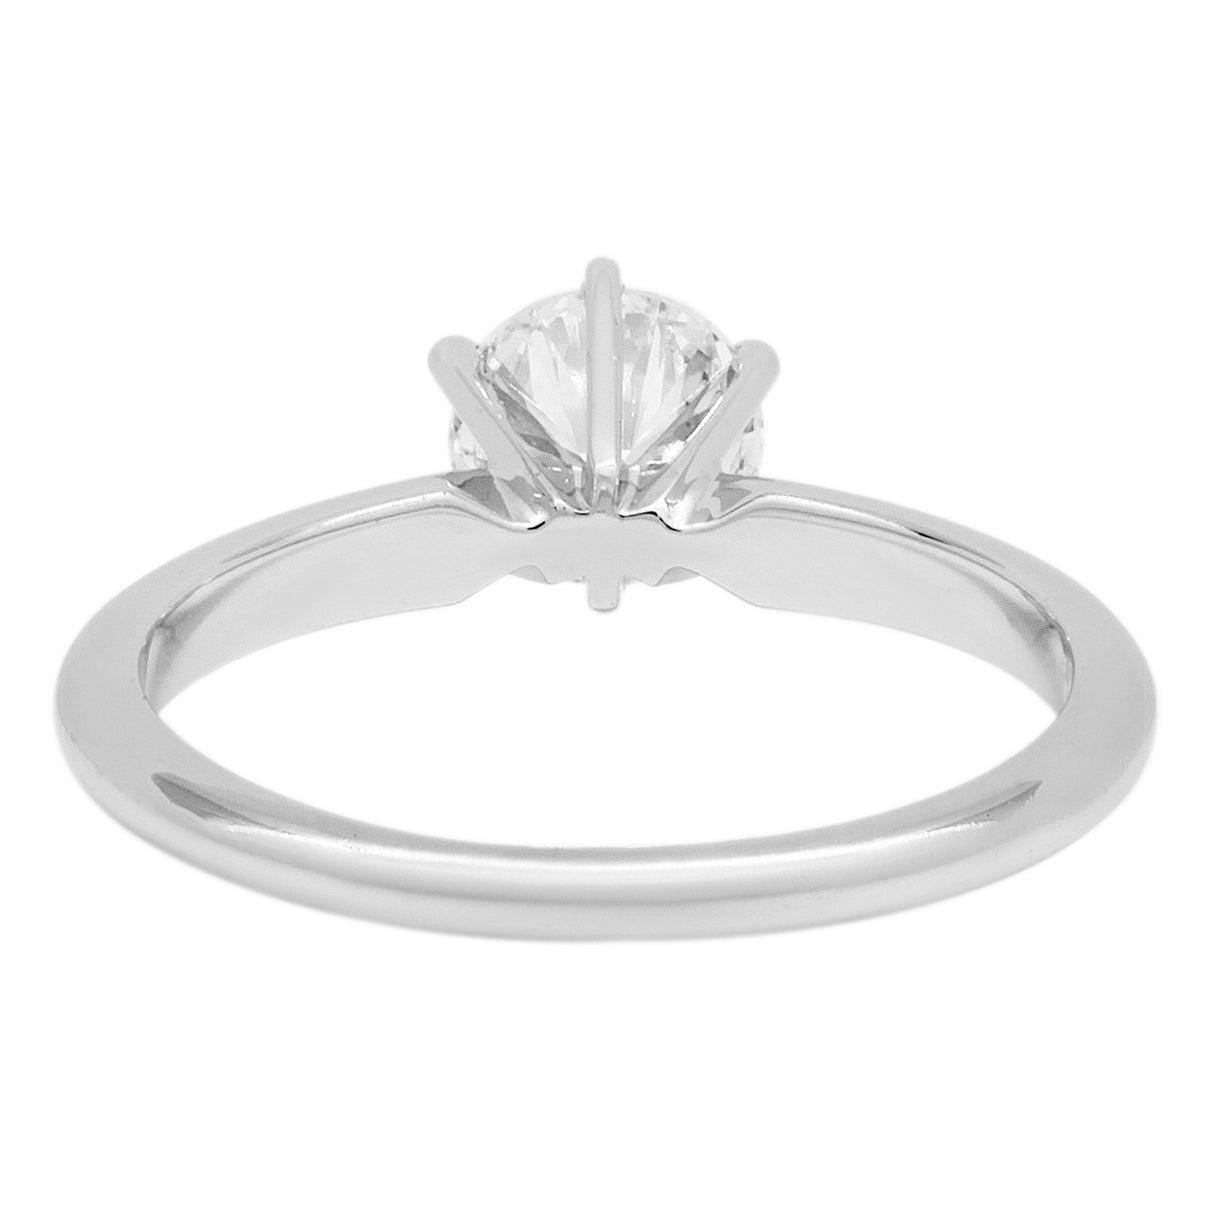 14K White Gold 1.00 Carat Diamond Solitaire Ring